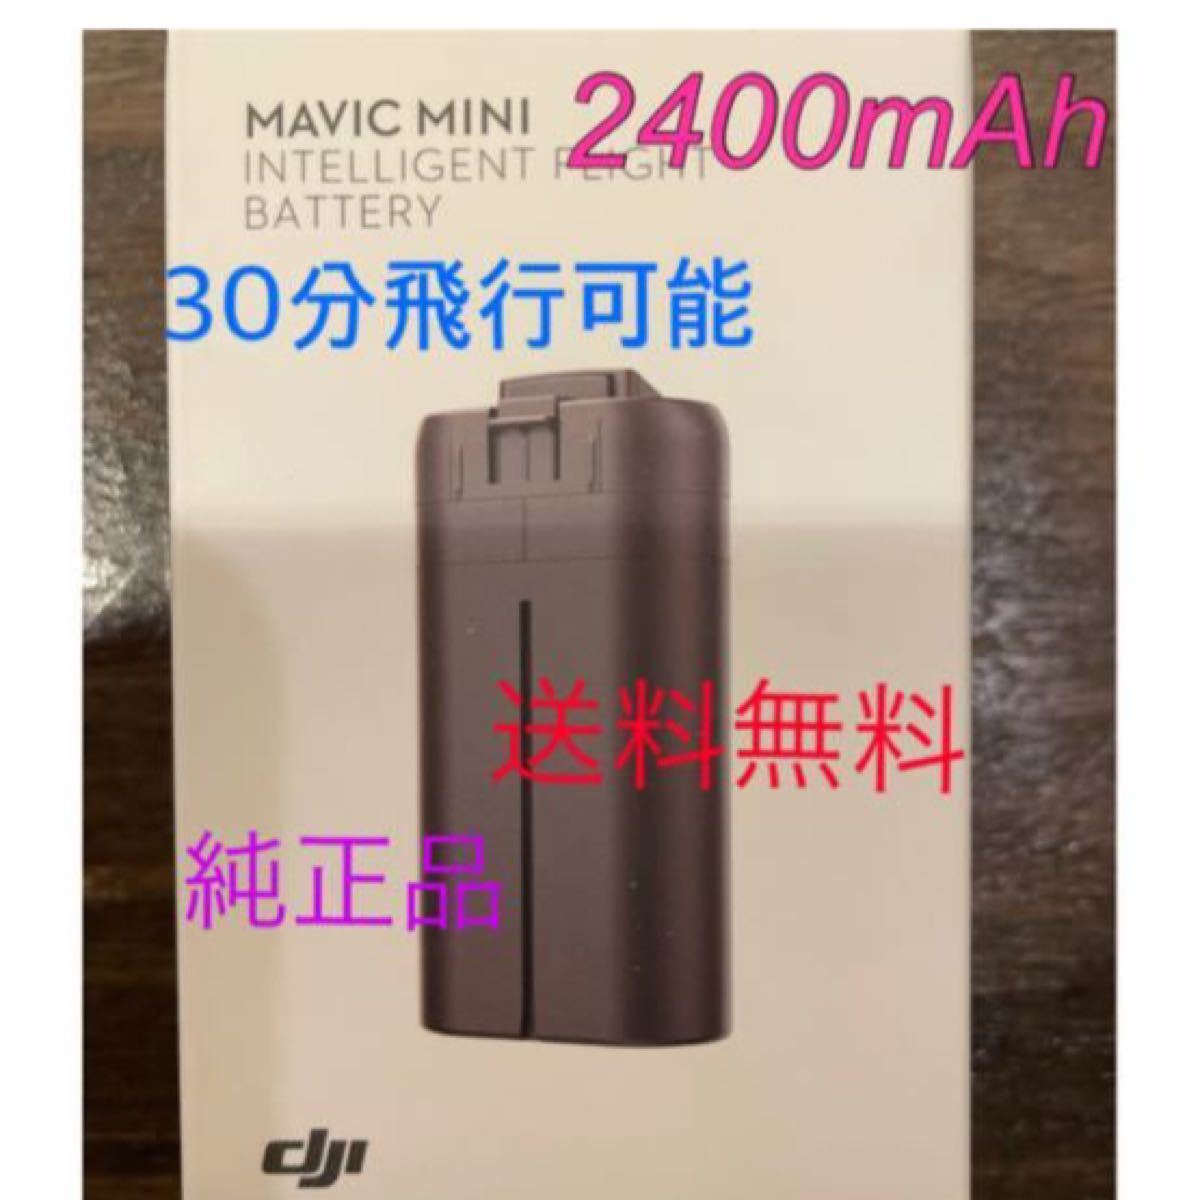 Mavic mini .DJI mini2 用　2400mAh 海外バッテリー